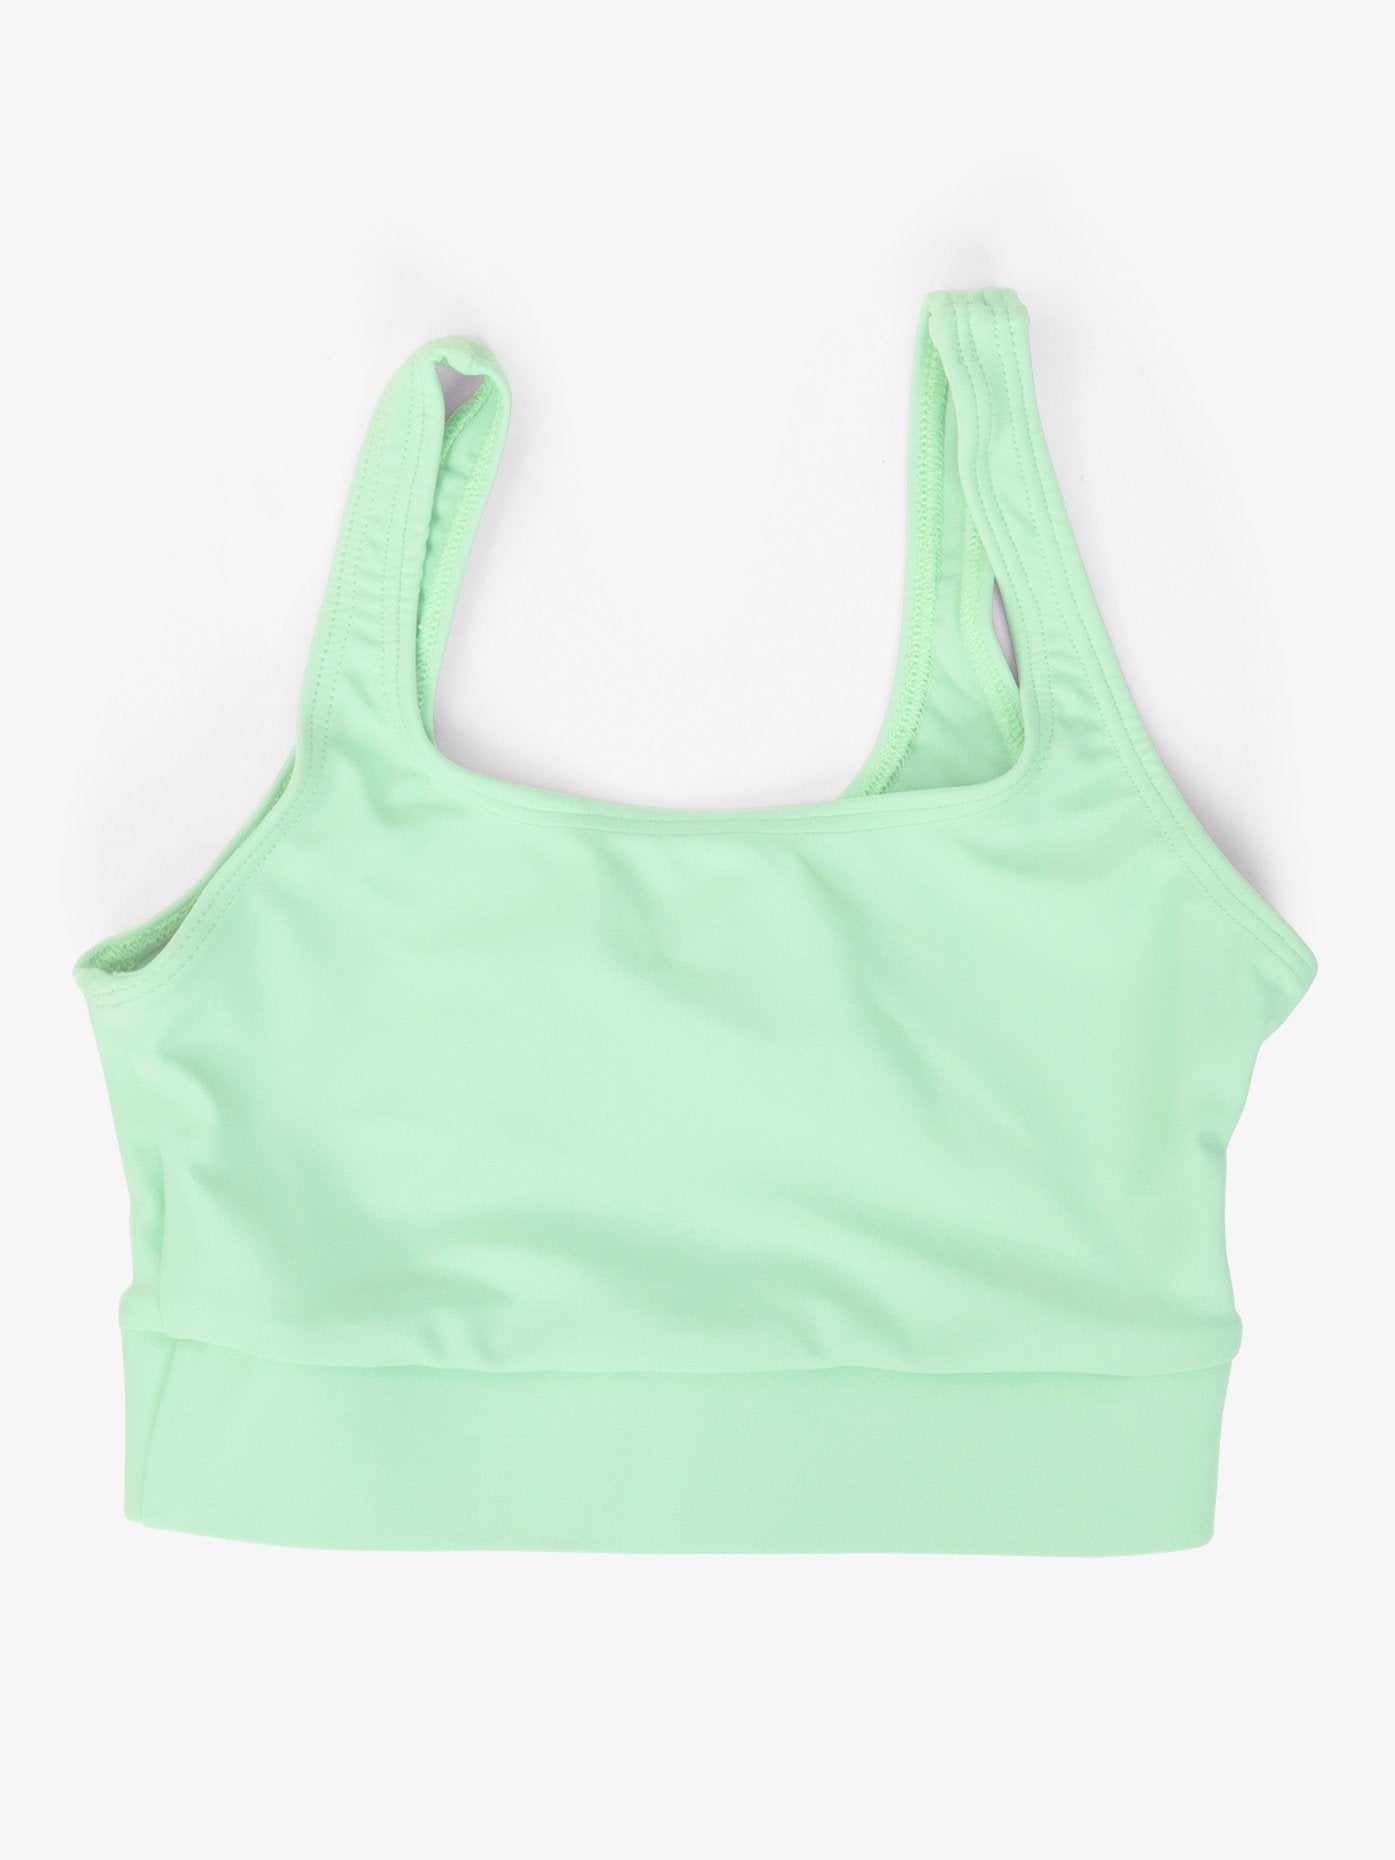 Women’s pinched back mint green bra top